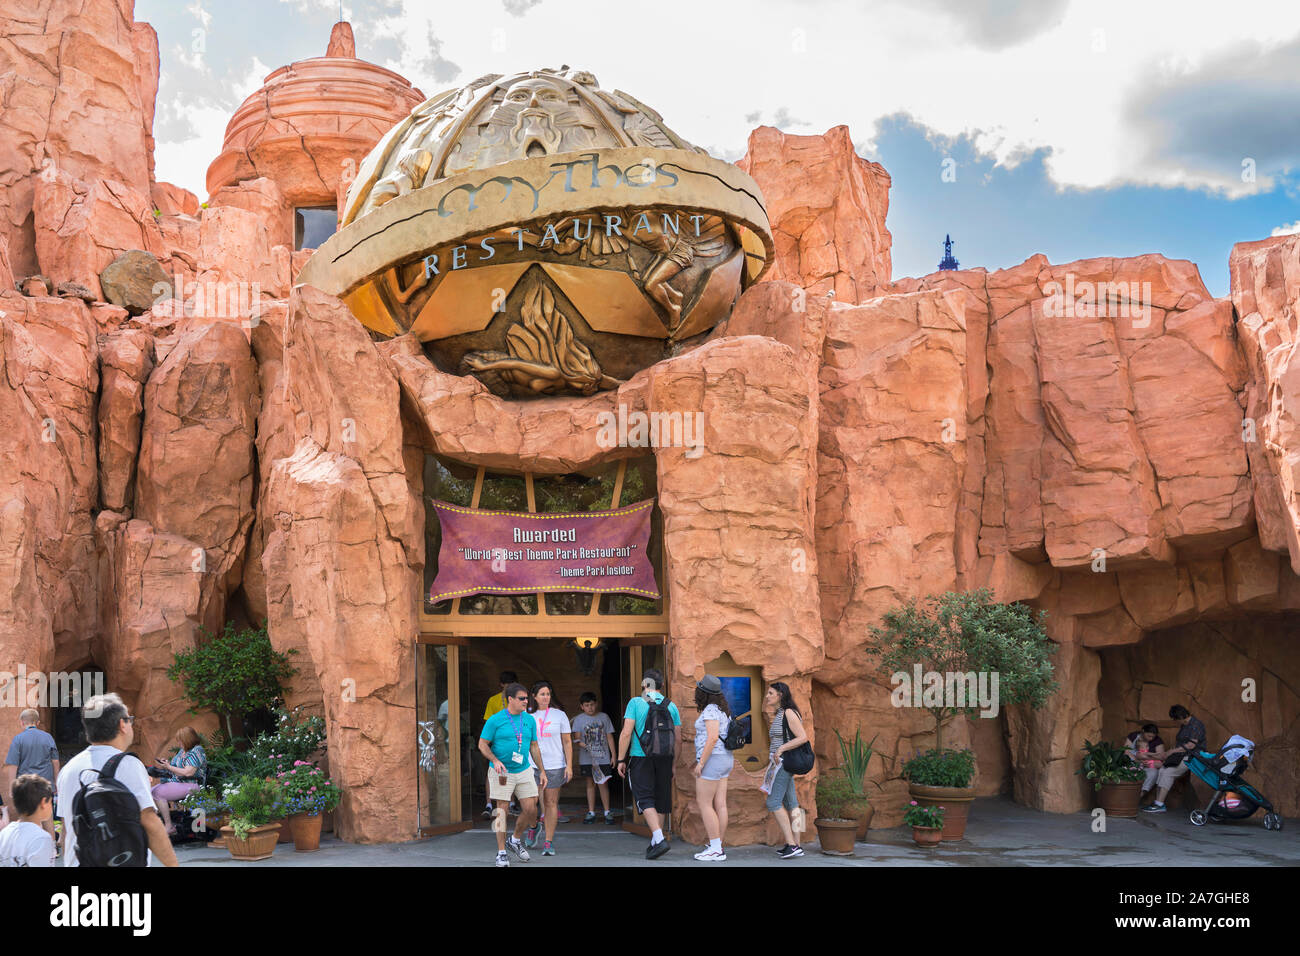 Best Theme Park Restaurant Universal Studios - Theme Image